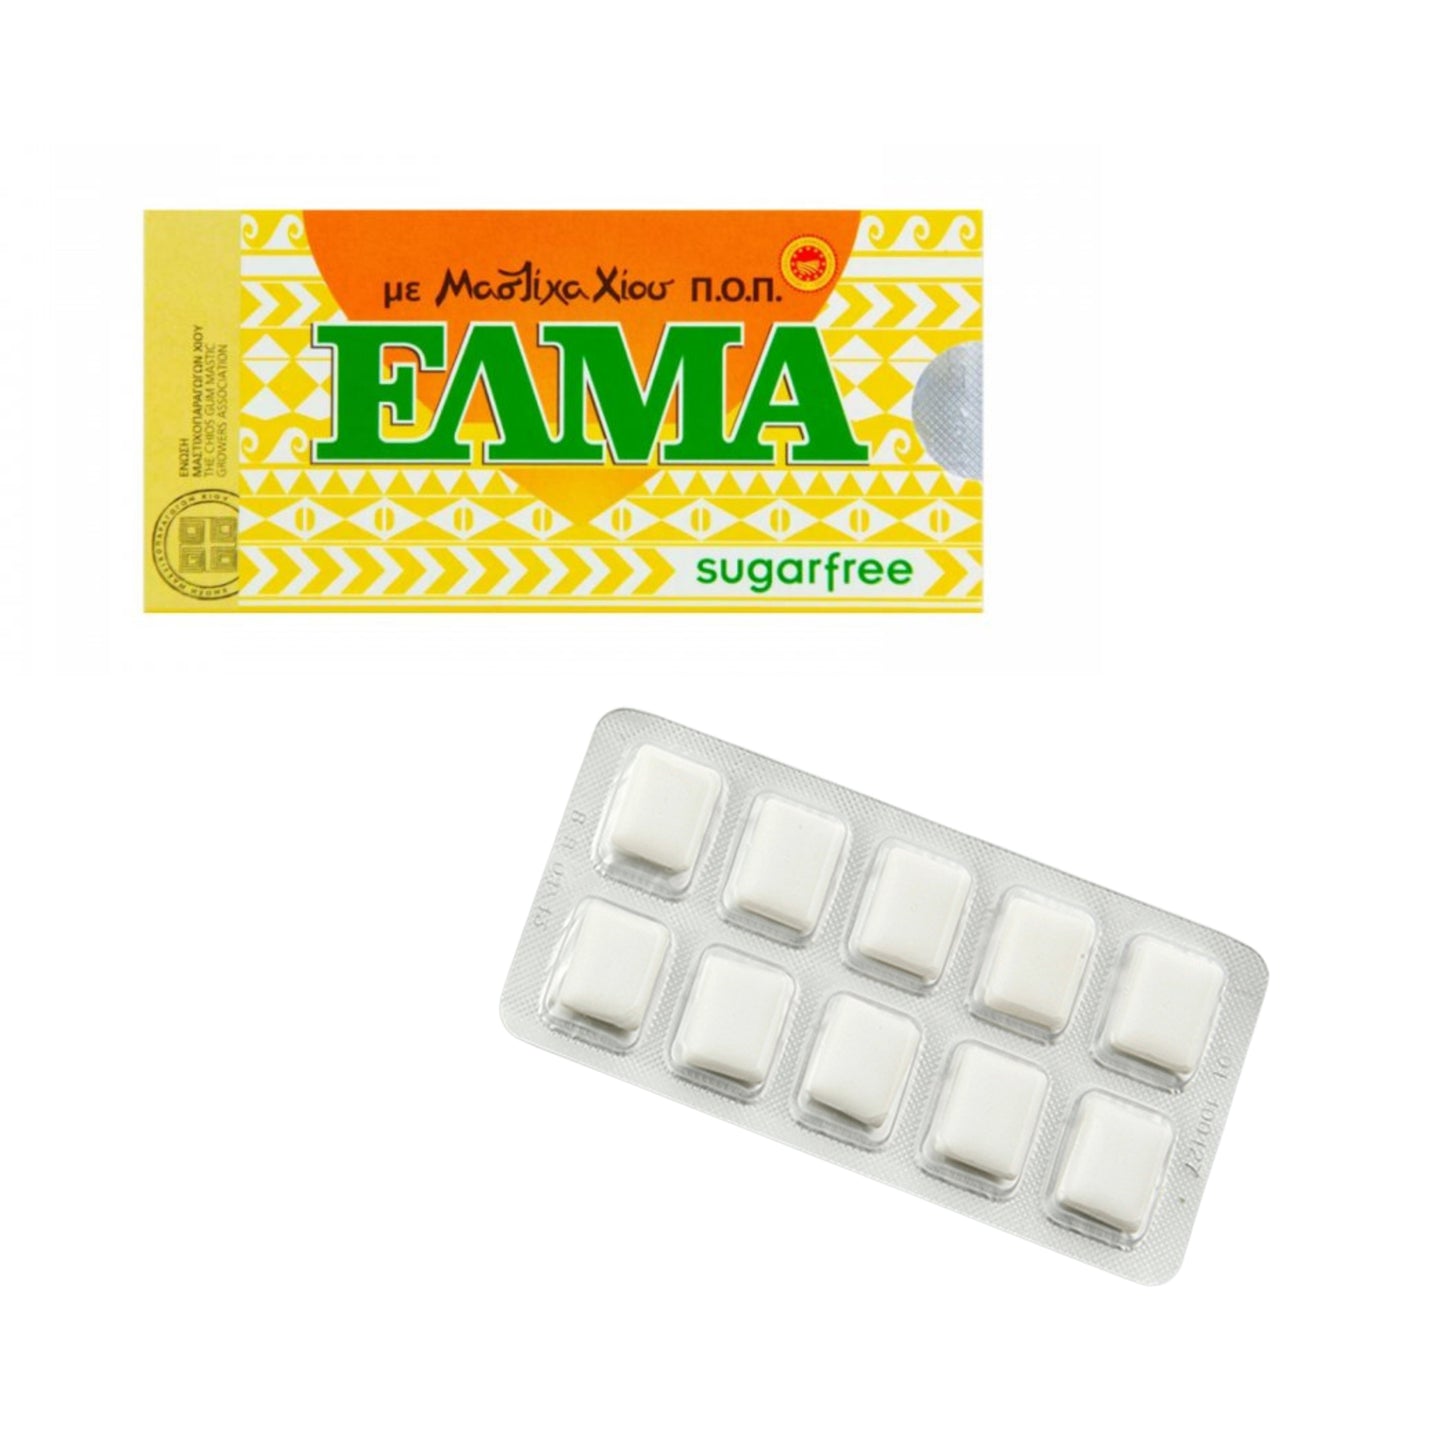 Elma sugar free mastic gum - 20x13g